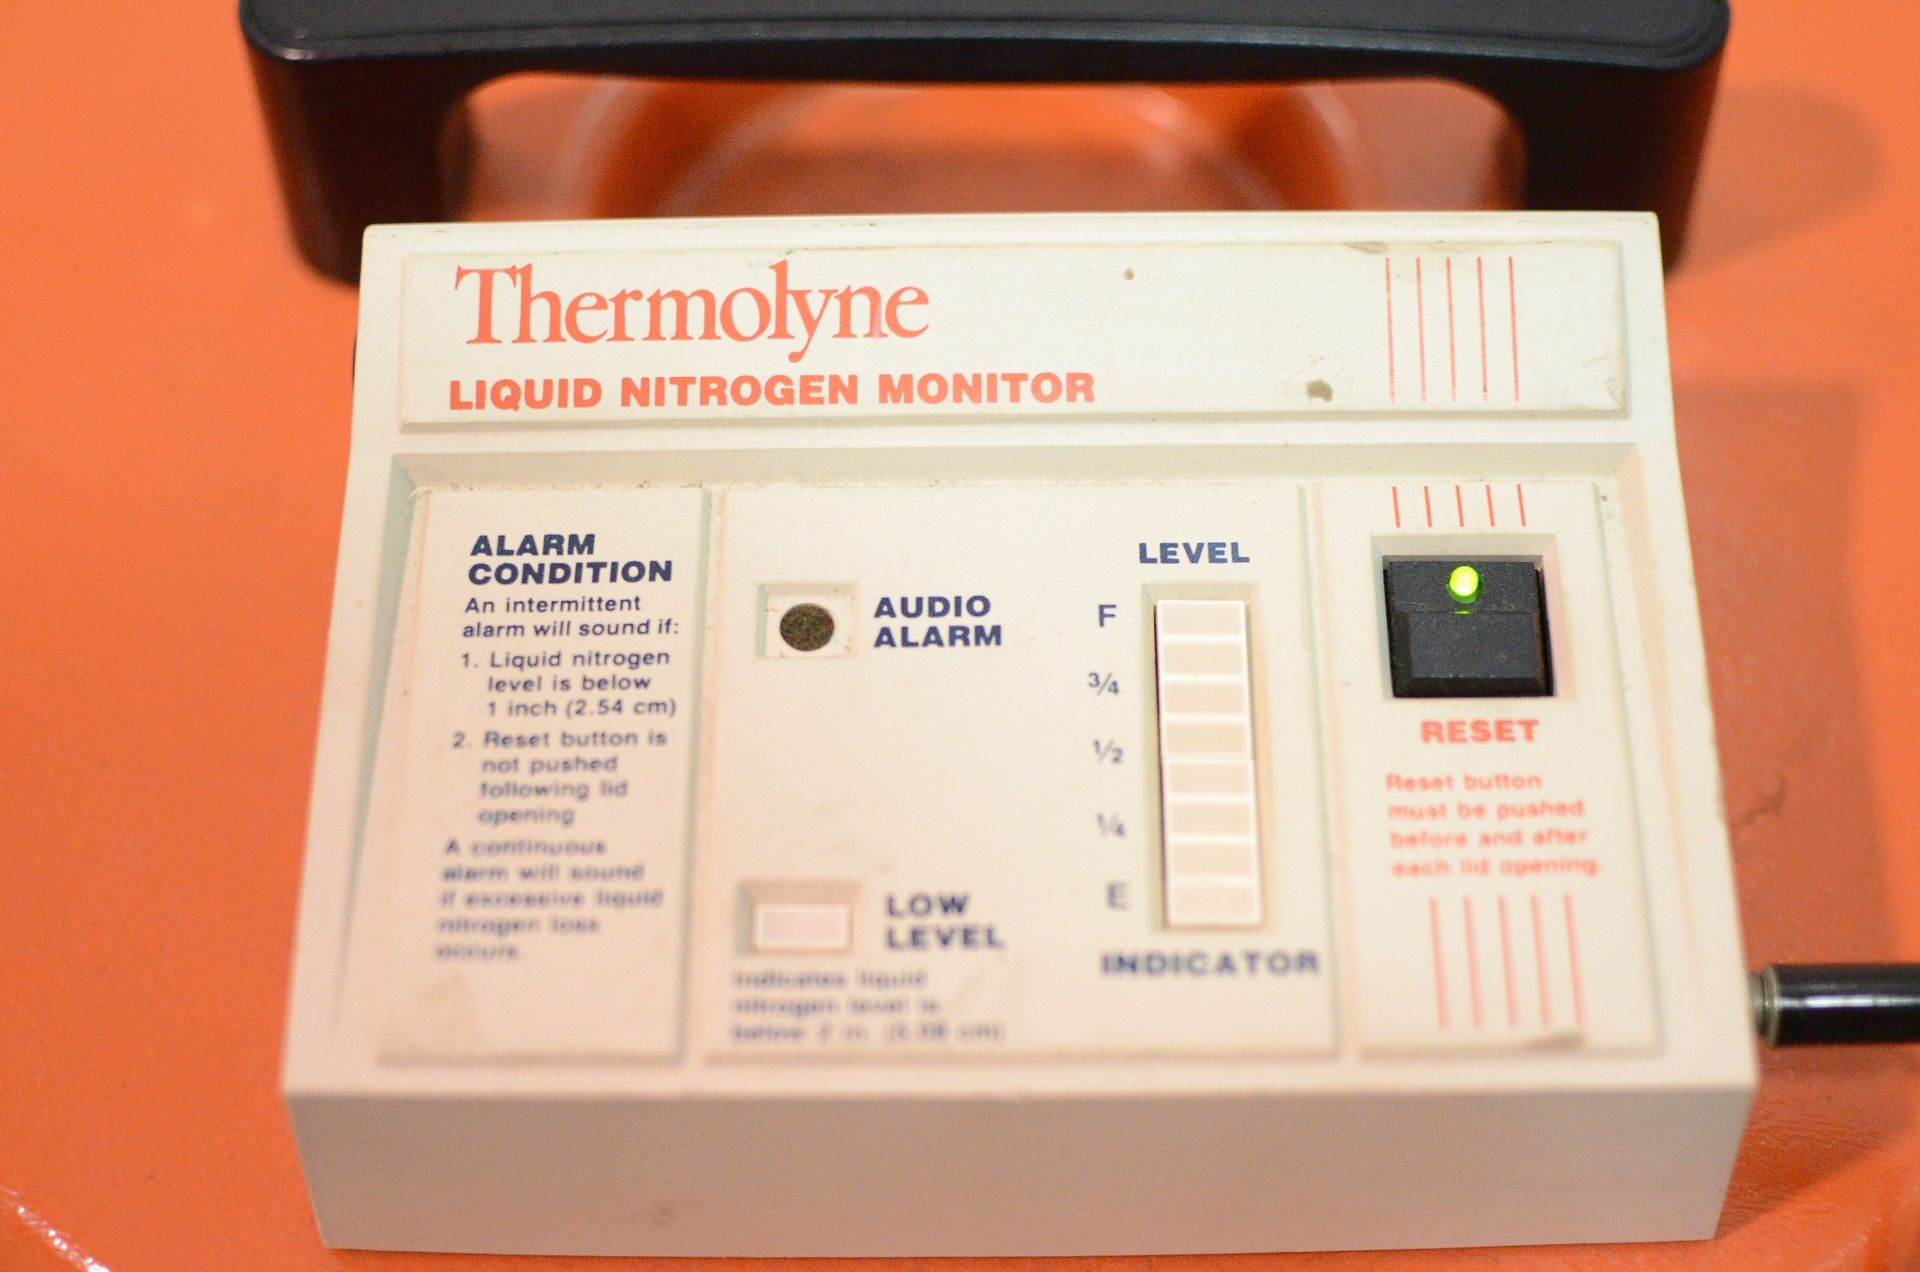 Thermolyne Locator 6 Plus Liquid Nitrogen Monitoring and Alarm System - Image 2 of 3